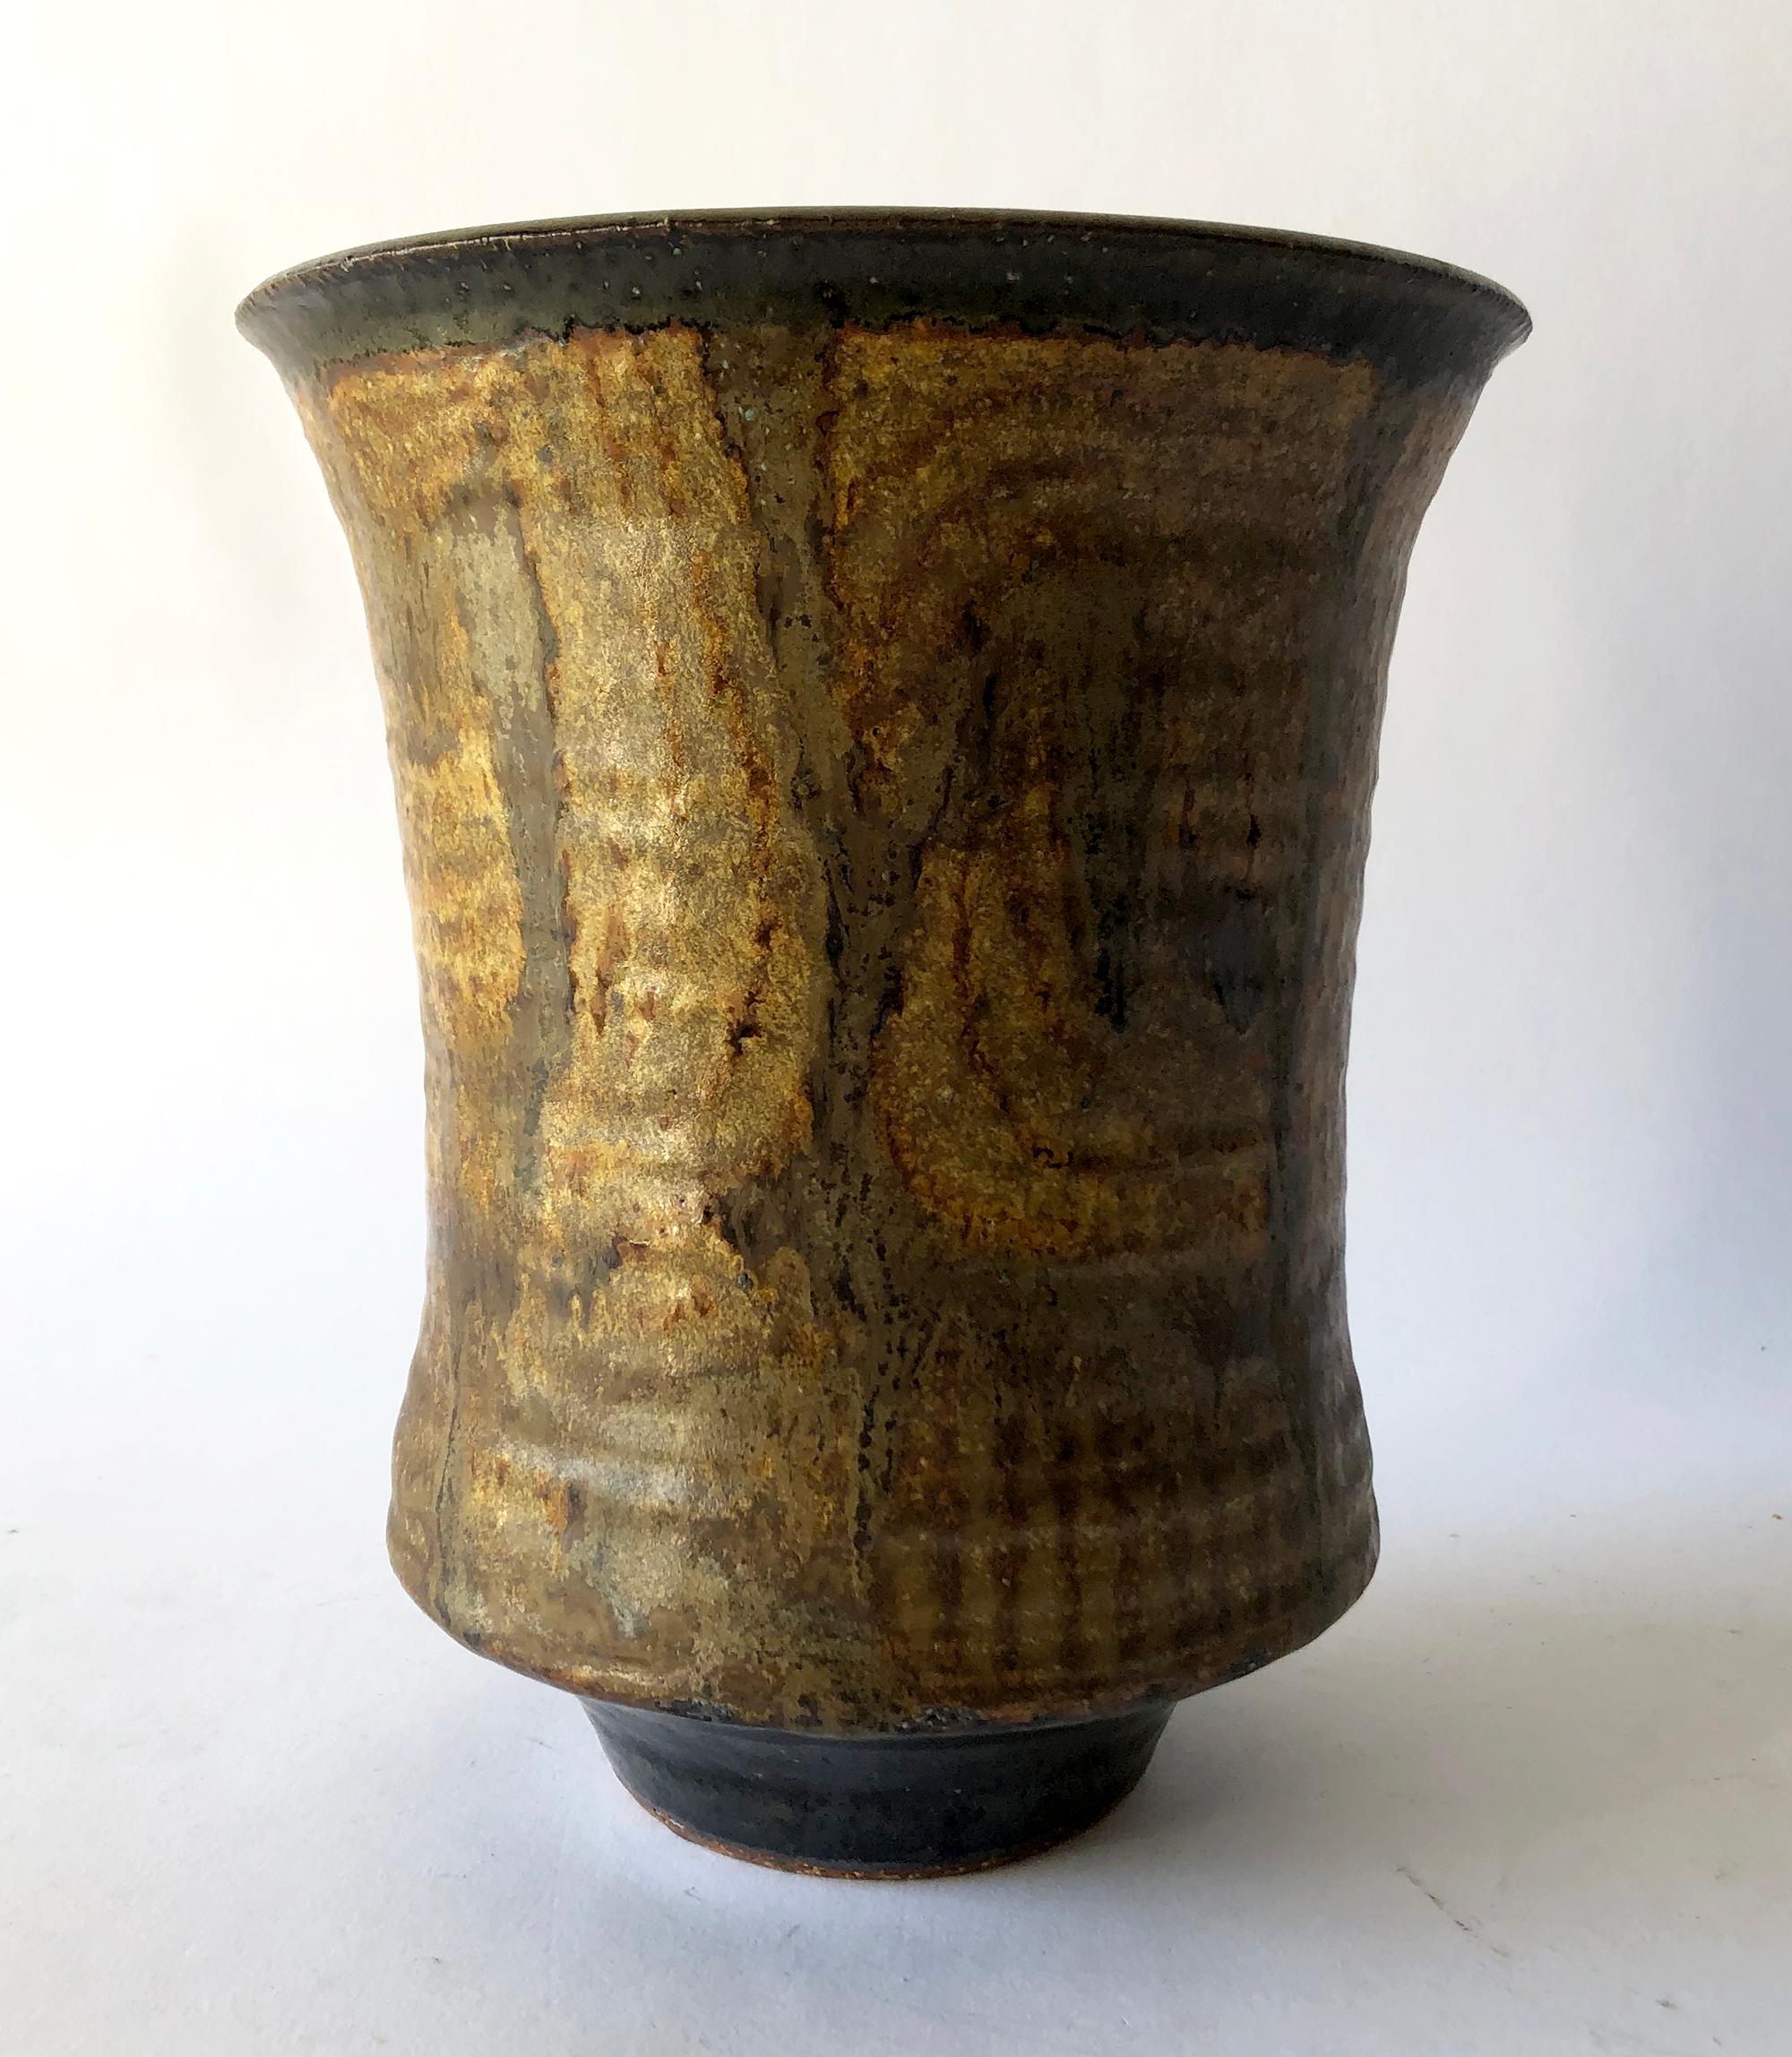 California studio vase made by Raul Coronel, 1974. Vase measures 8 3/4